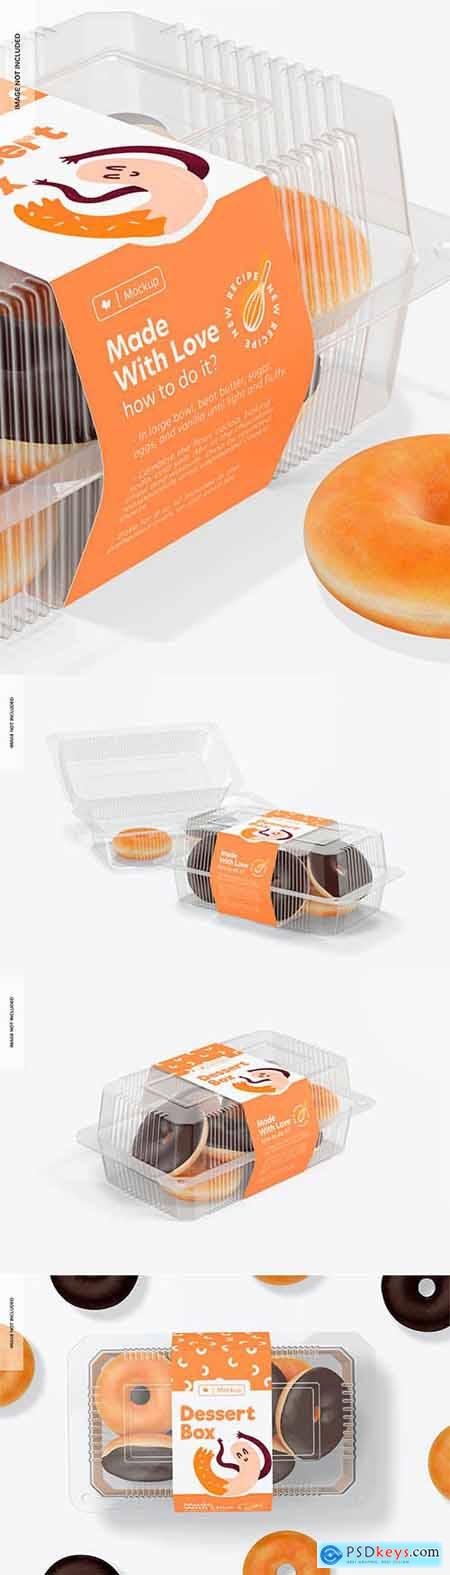 Clear disposable dessert box mockup